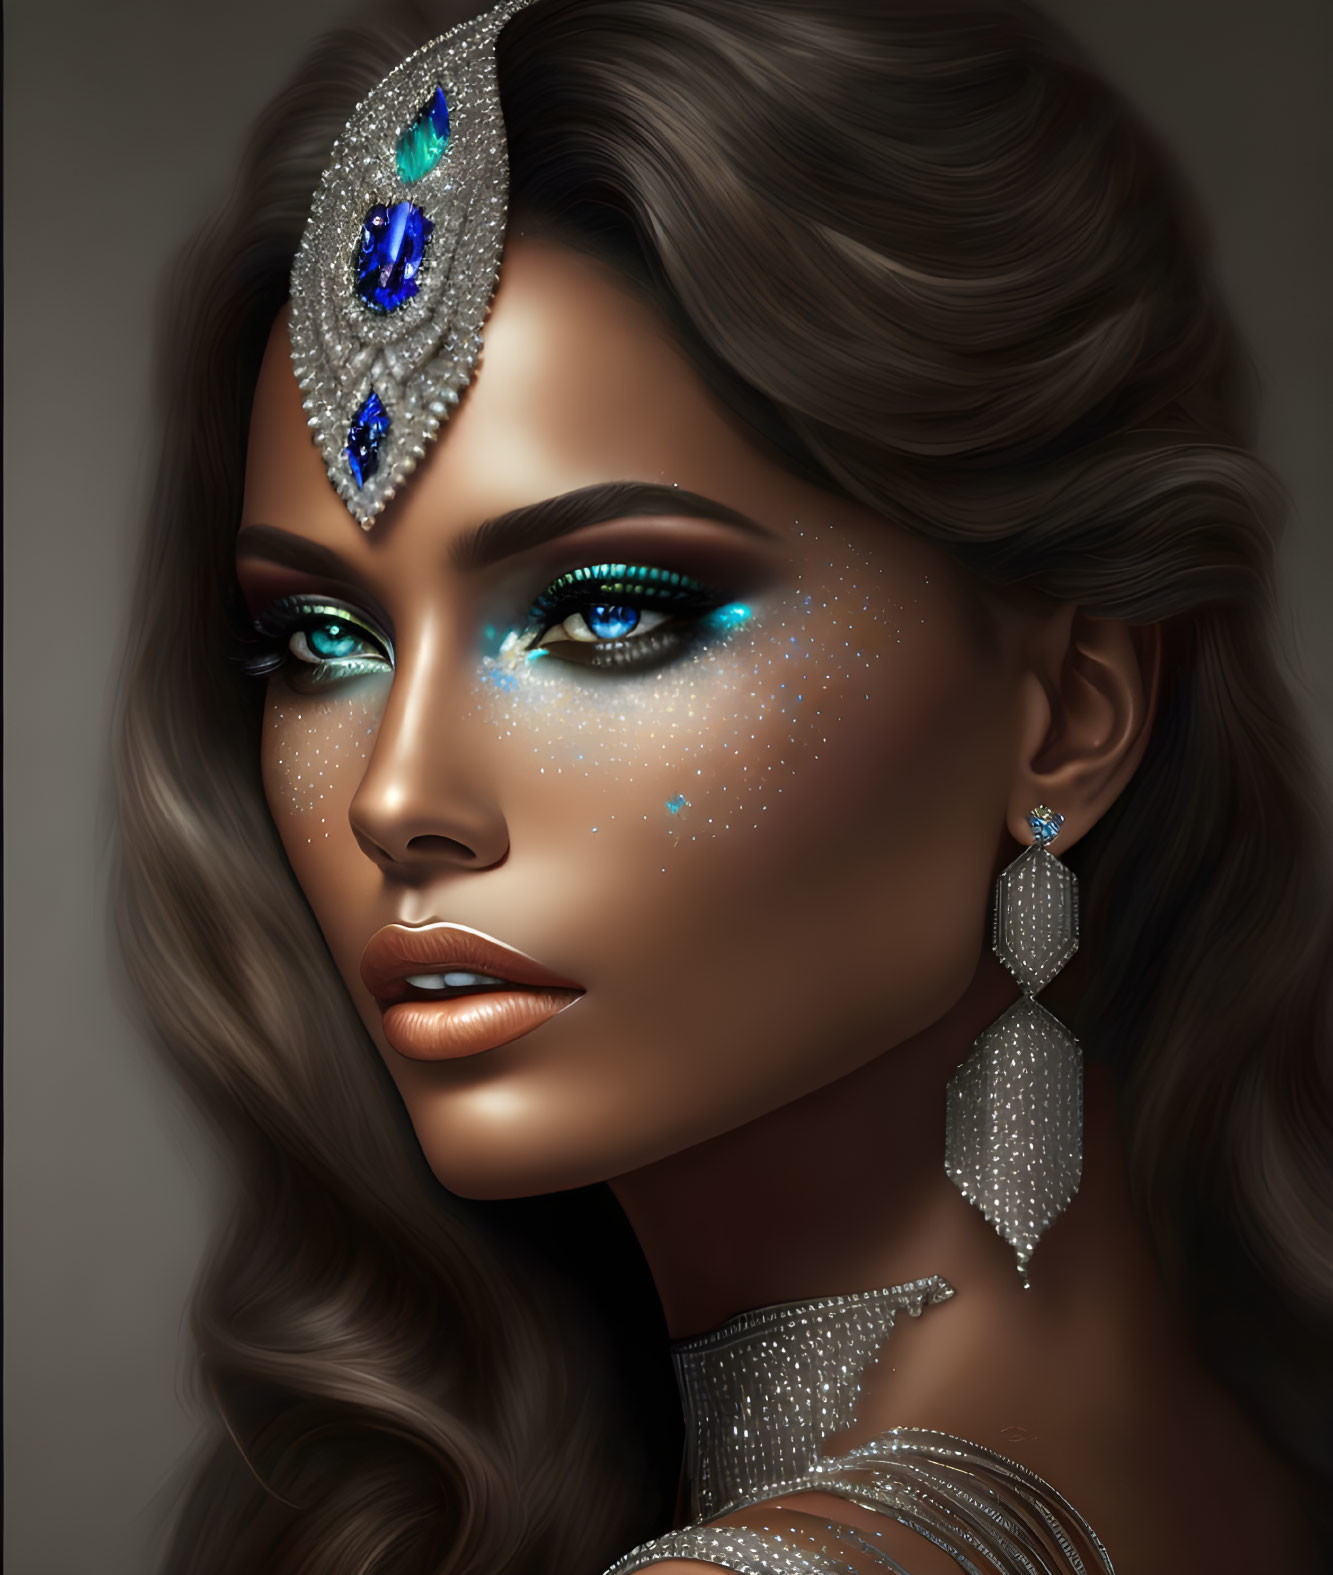 Digital Artwork: Woman with Blue Eyes & Bejeweled Headpiece